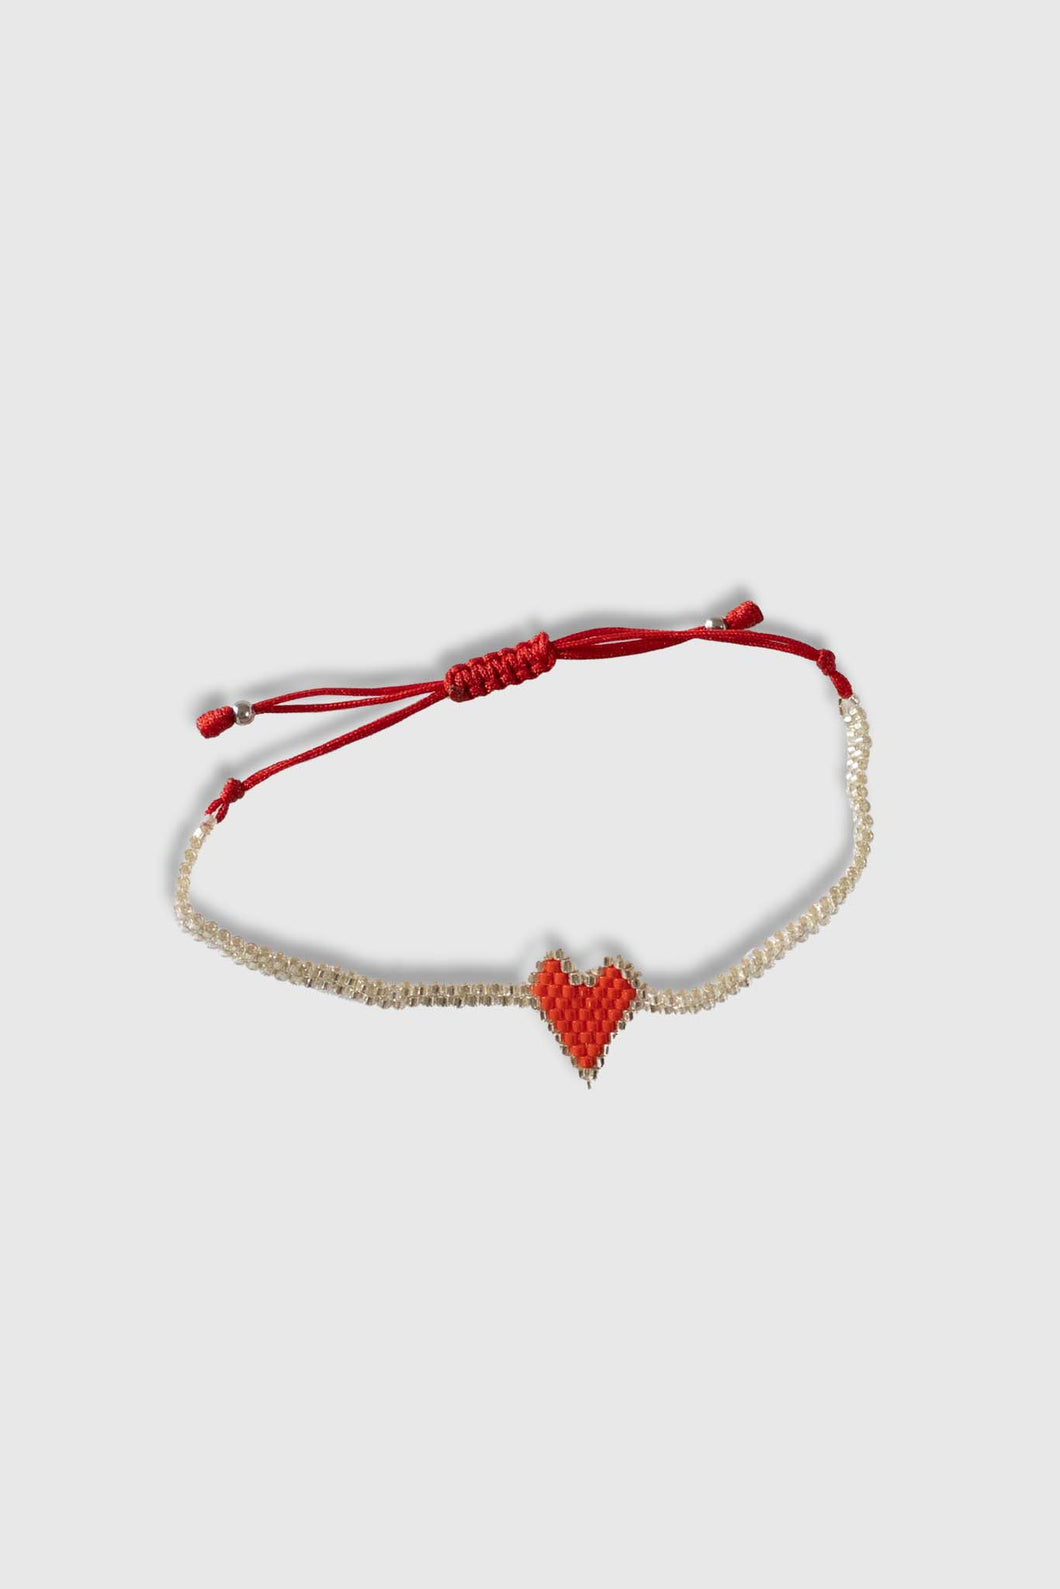 Red Heart Beaded String bracelet in silver